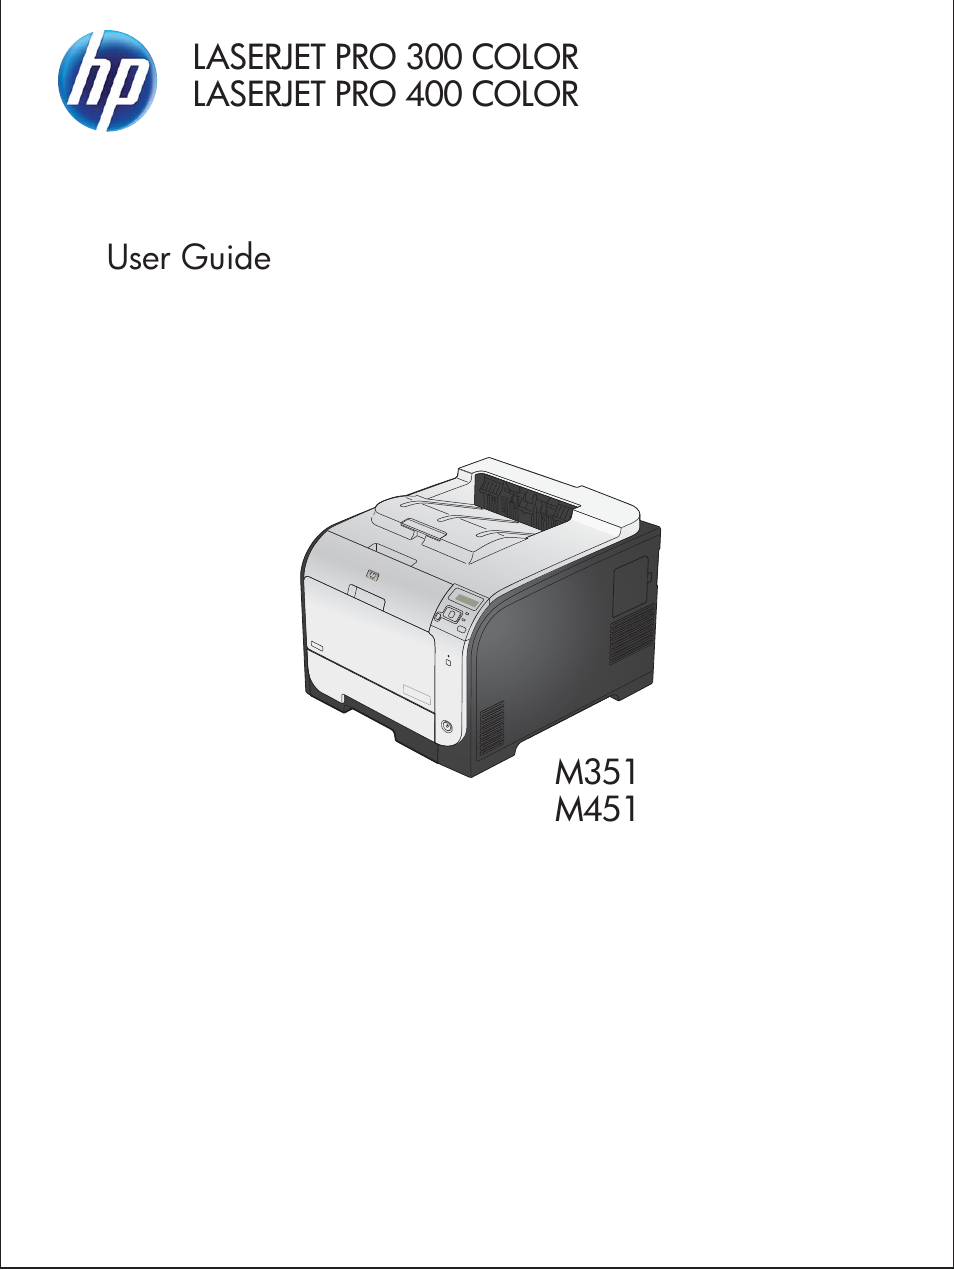 HP LaserJet Pro 400 color Printer M451 series User Manual | 242 pages